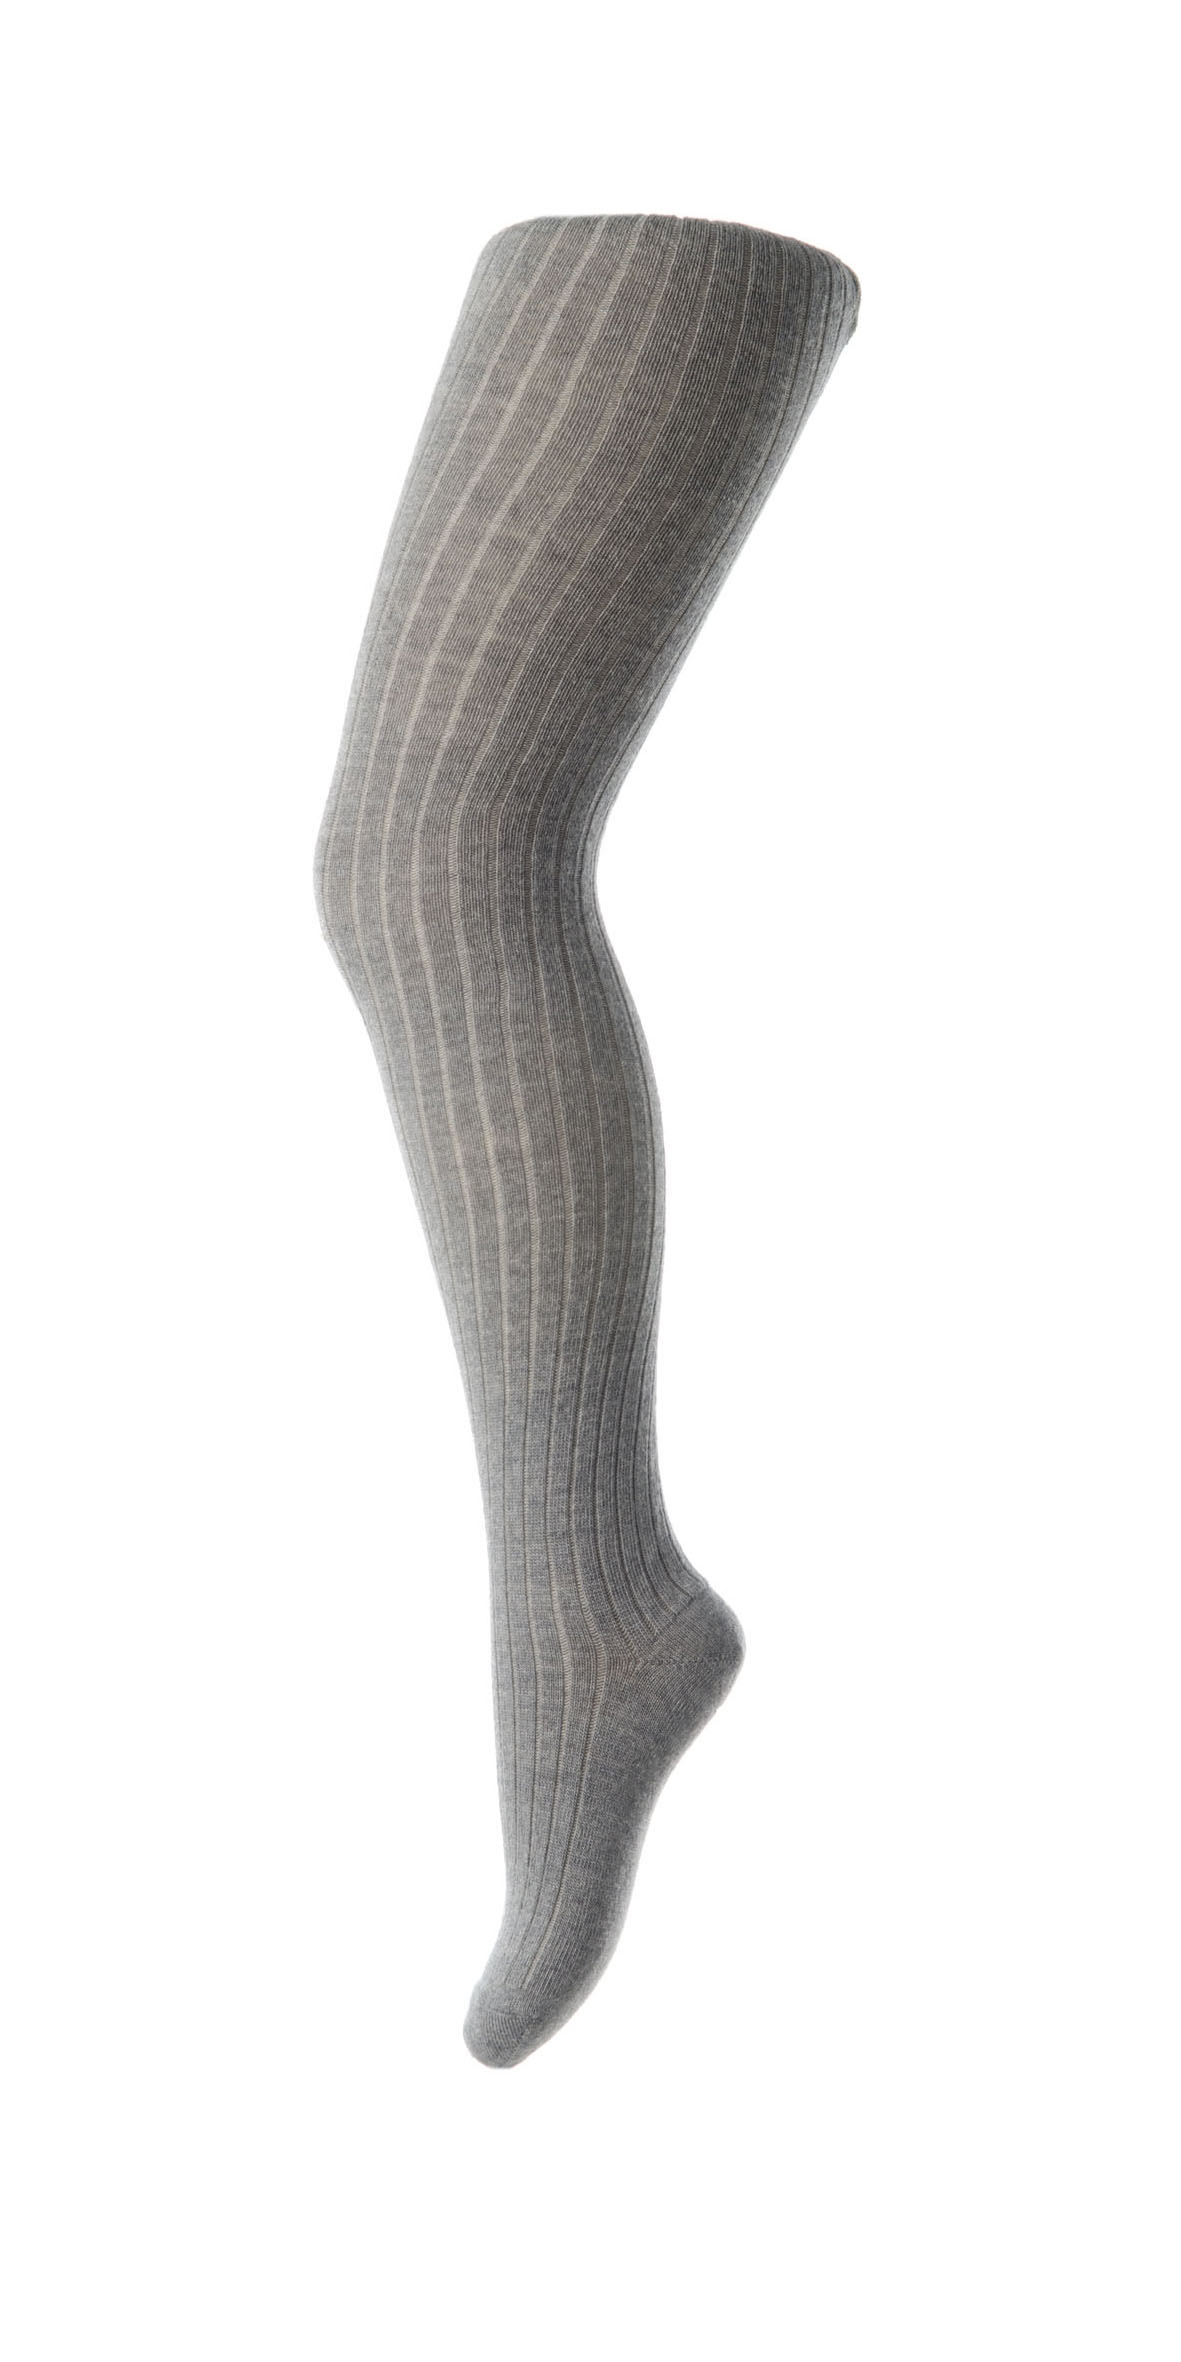  Uld Strømpebuks, Grey Marled, 100 cm